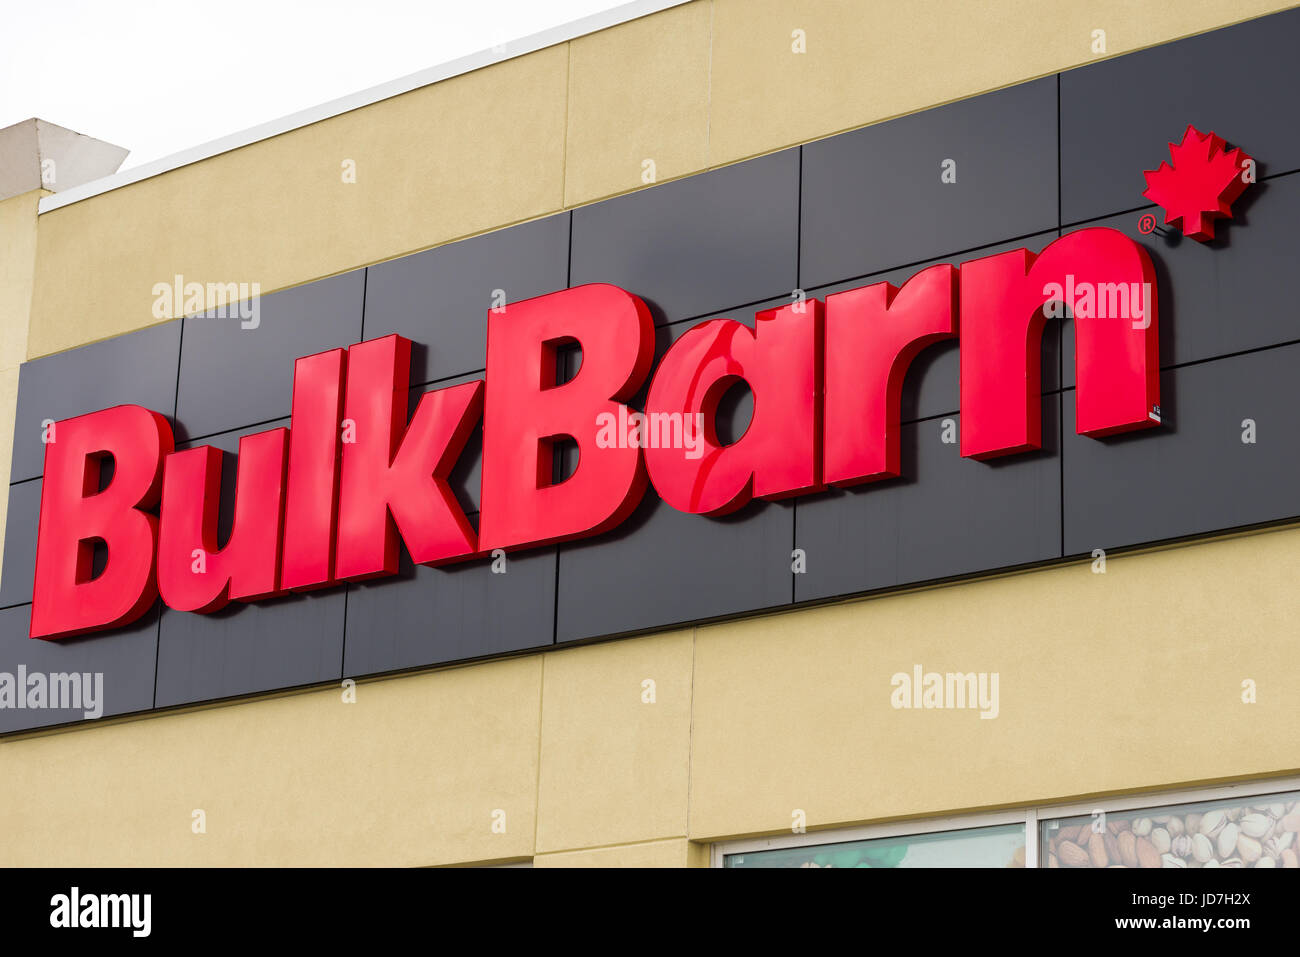 Bulk Barn Brand Logo On Building Exterior Stock Photo Alamy